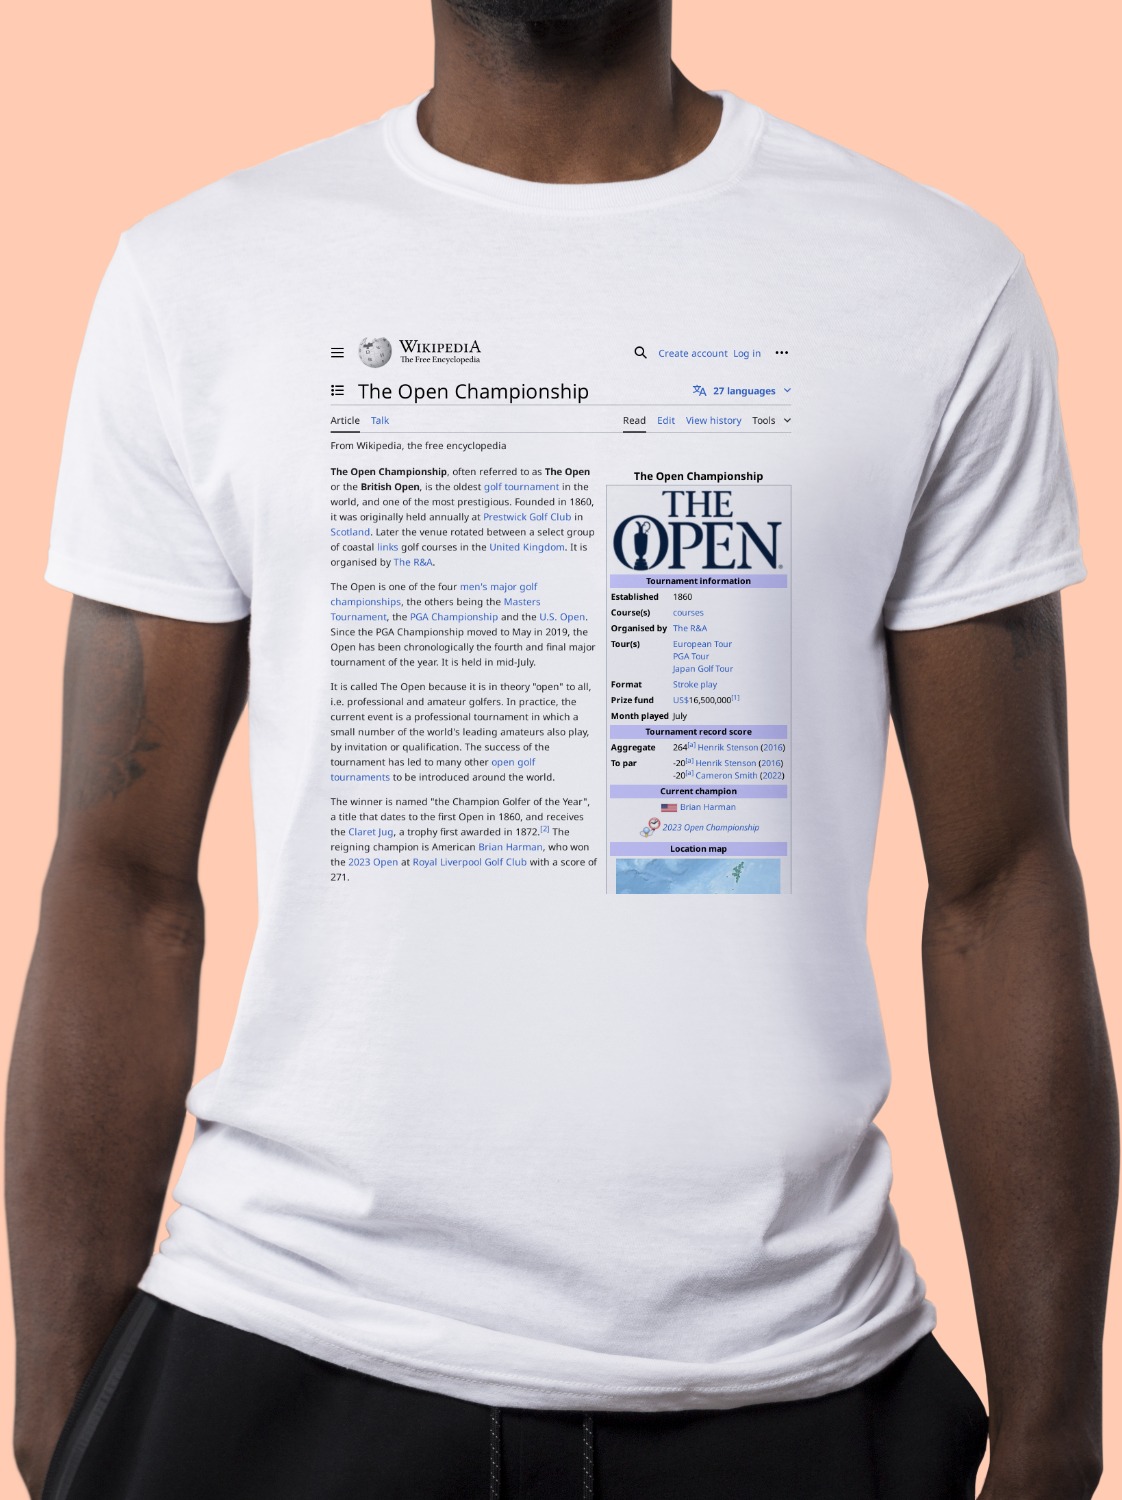 The Open Championship Wikipedia TShirt